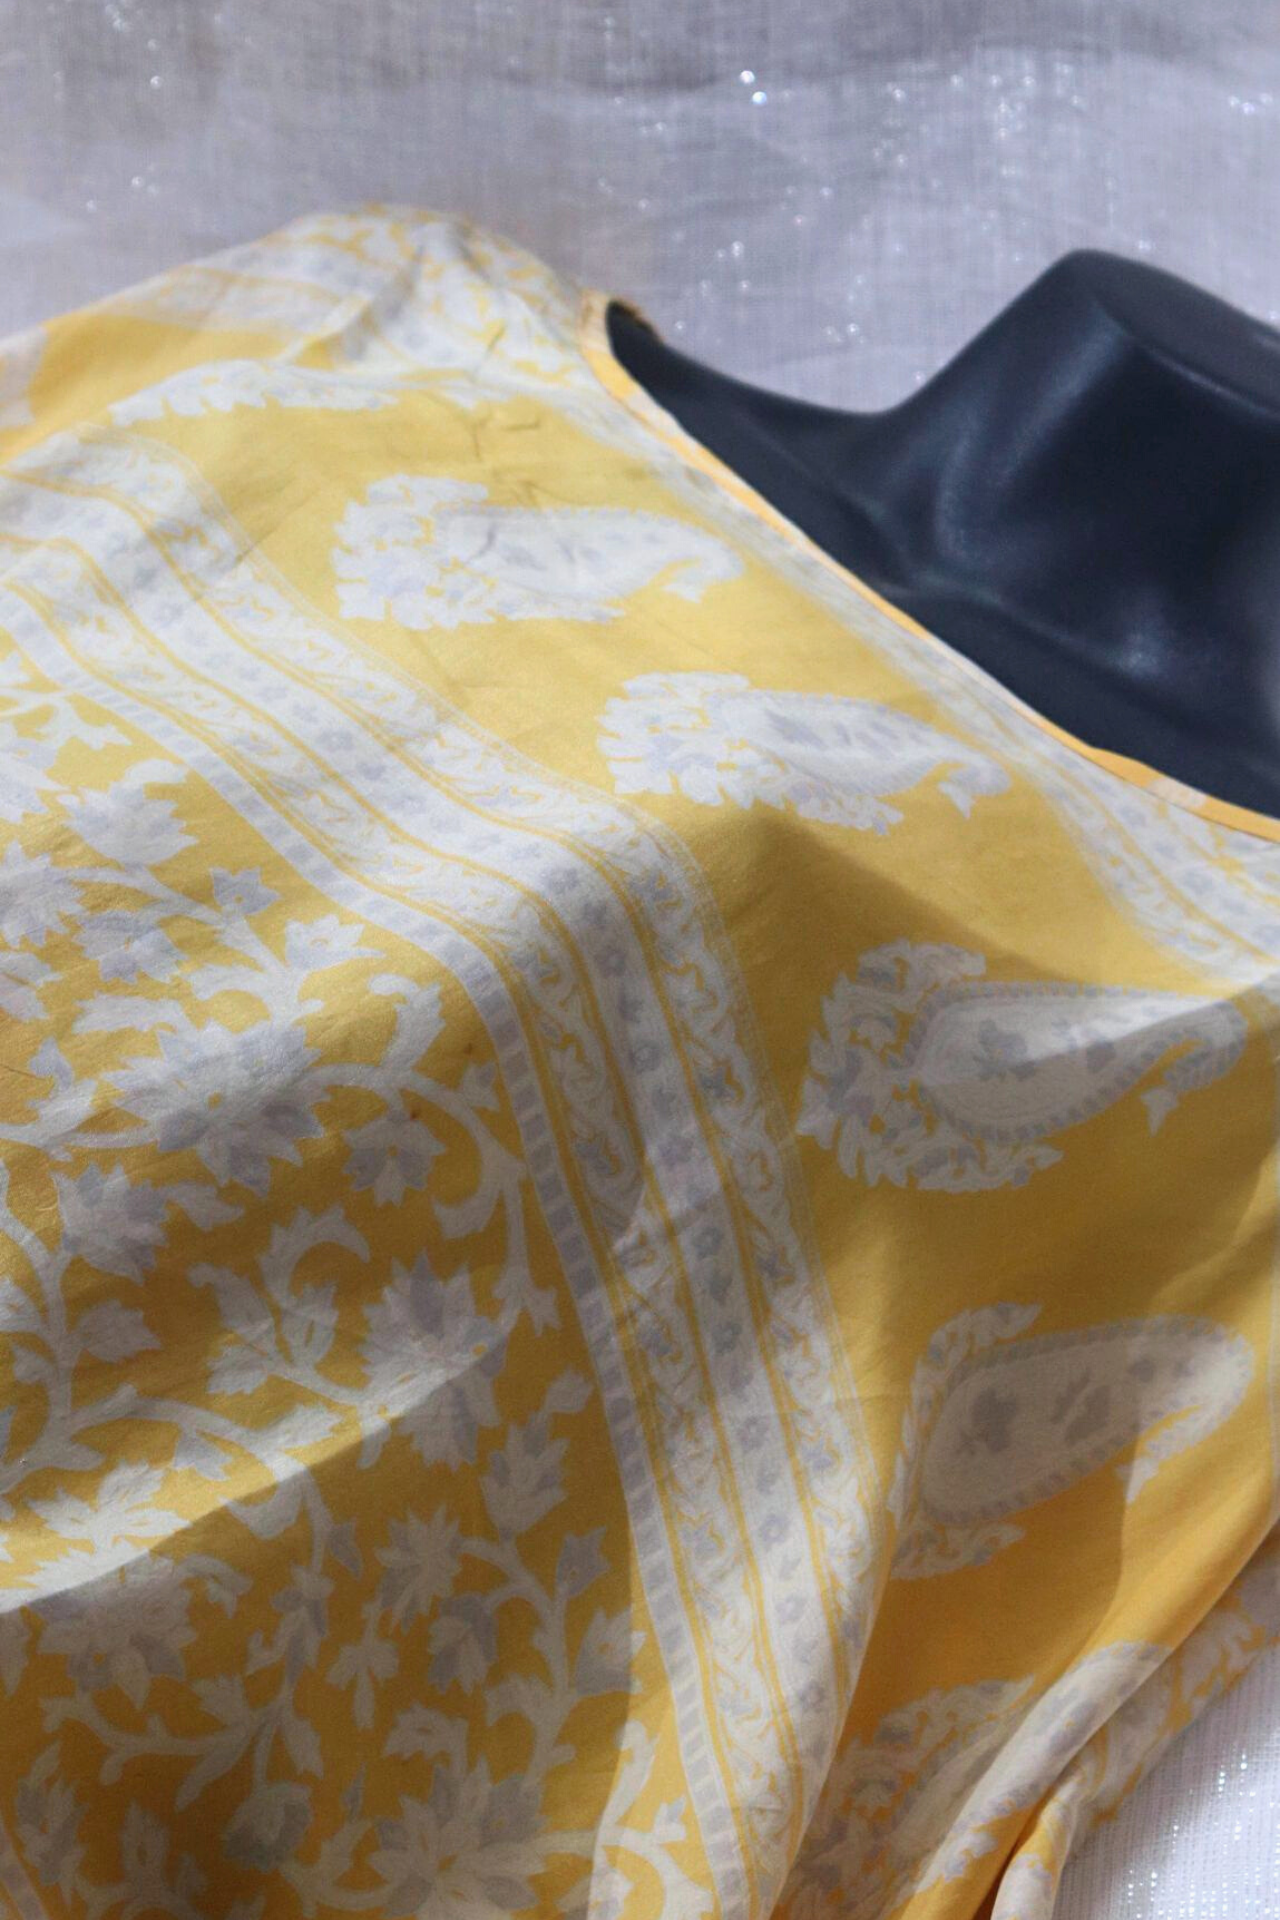 At Your Leisure, vintage sari top. 100% silk. Free size.